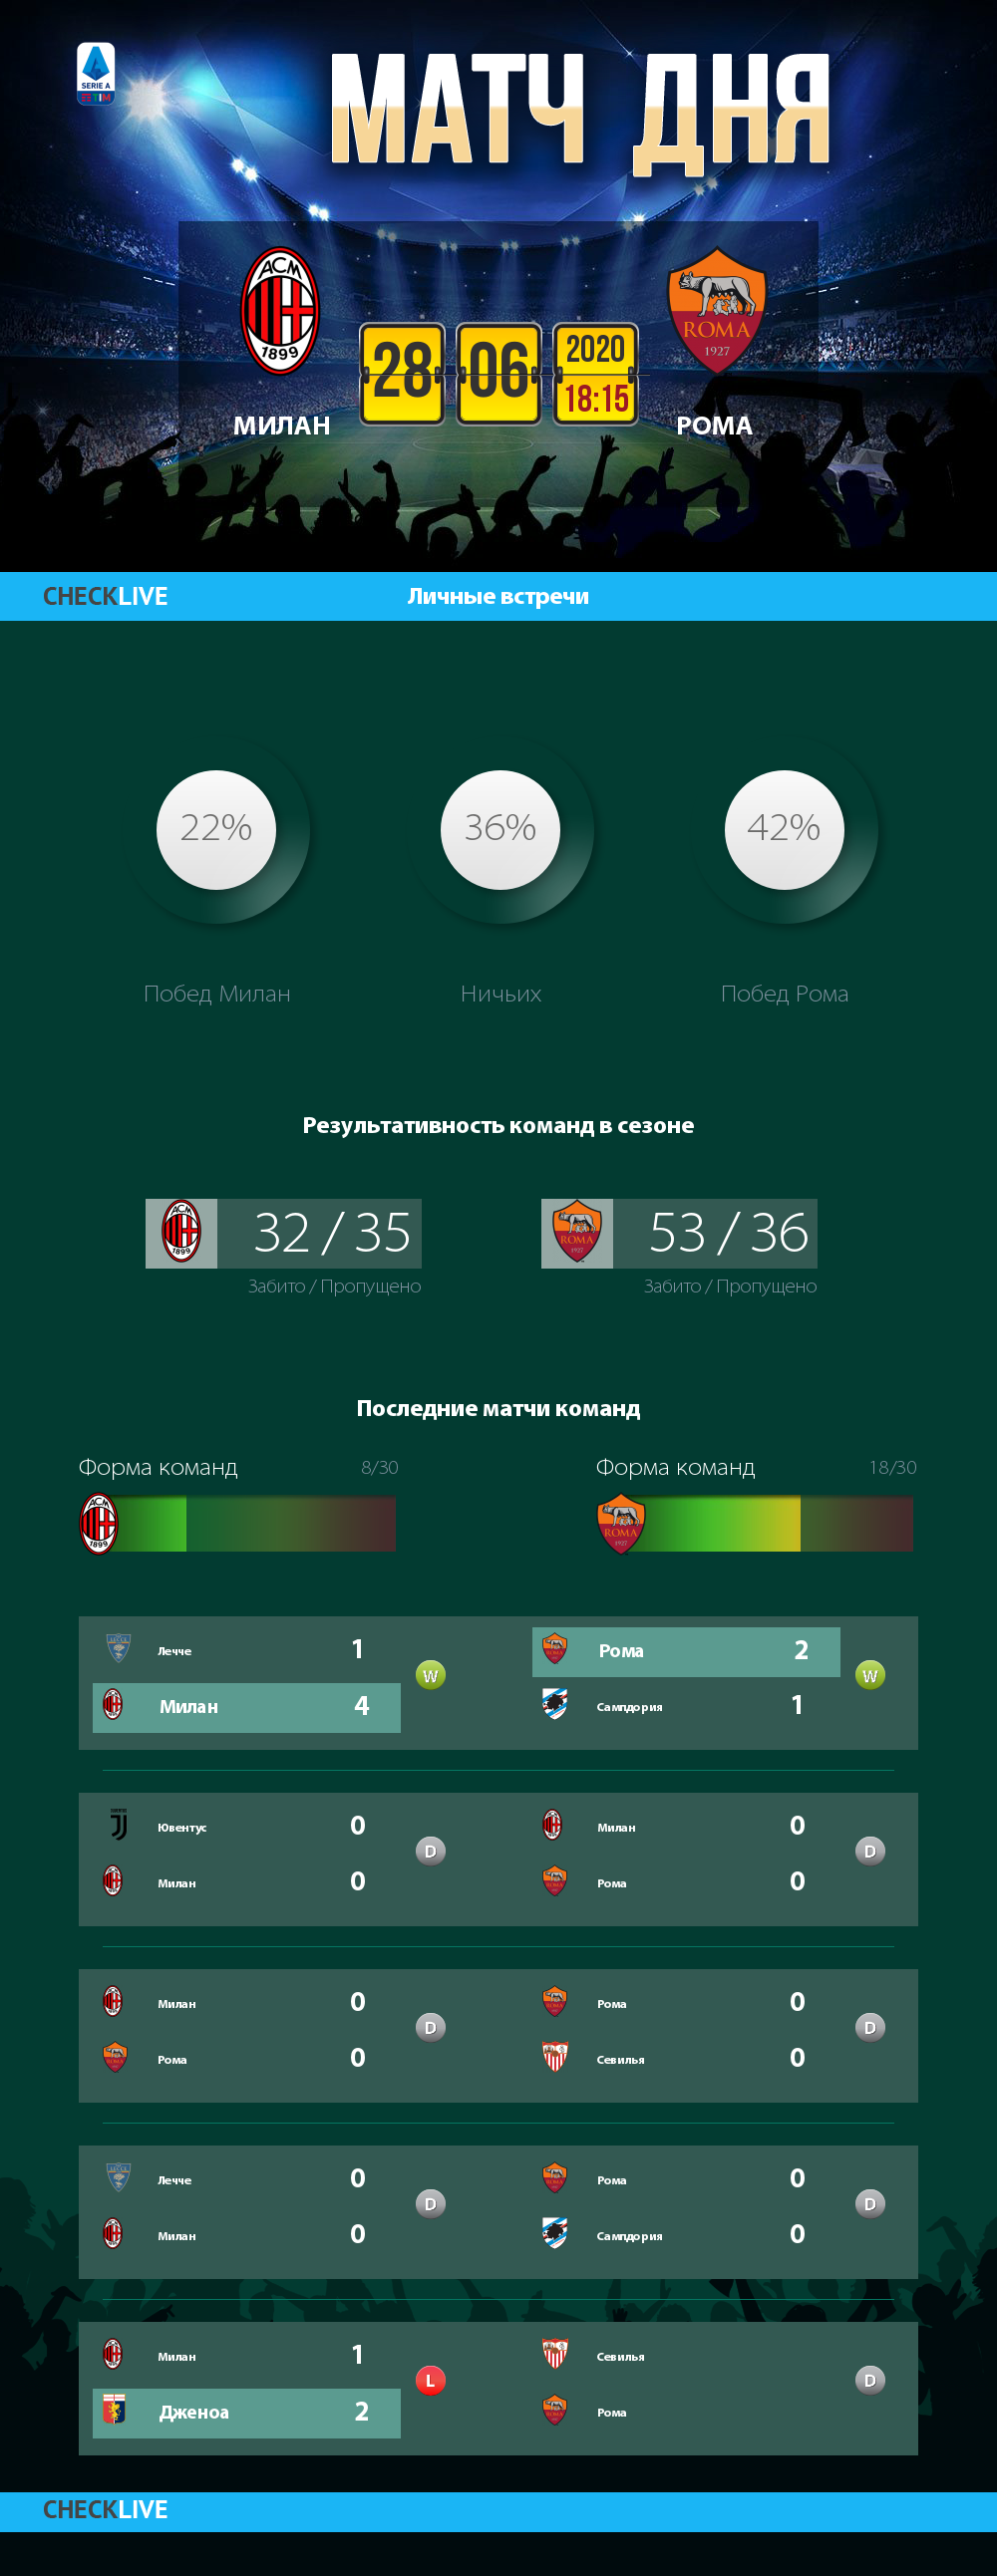 Инфографика Милан и Рома матч дня 28.06.2020